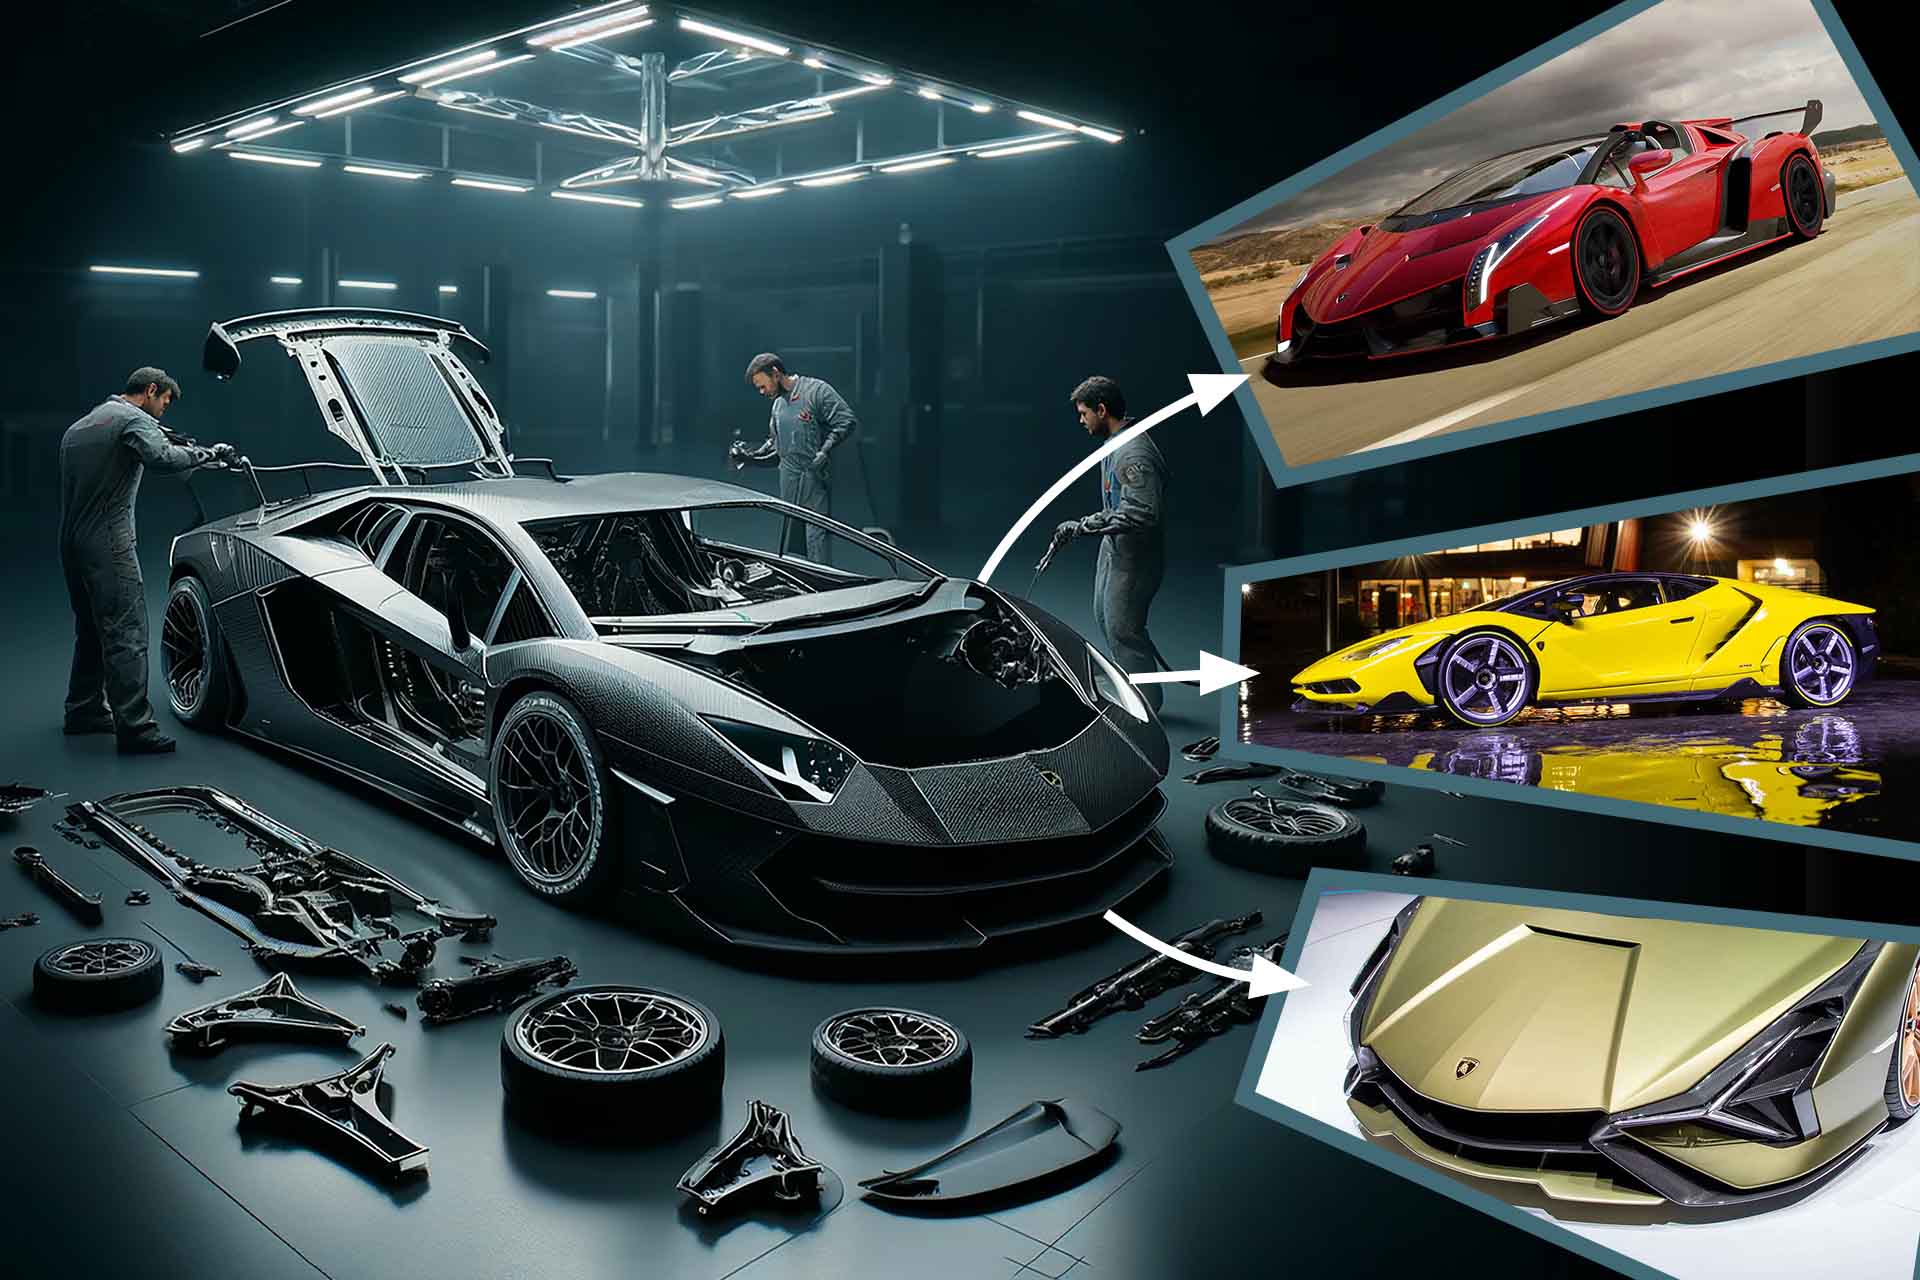 Hypercars based on the Lamborghini Aventador